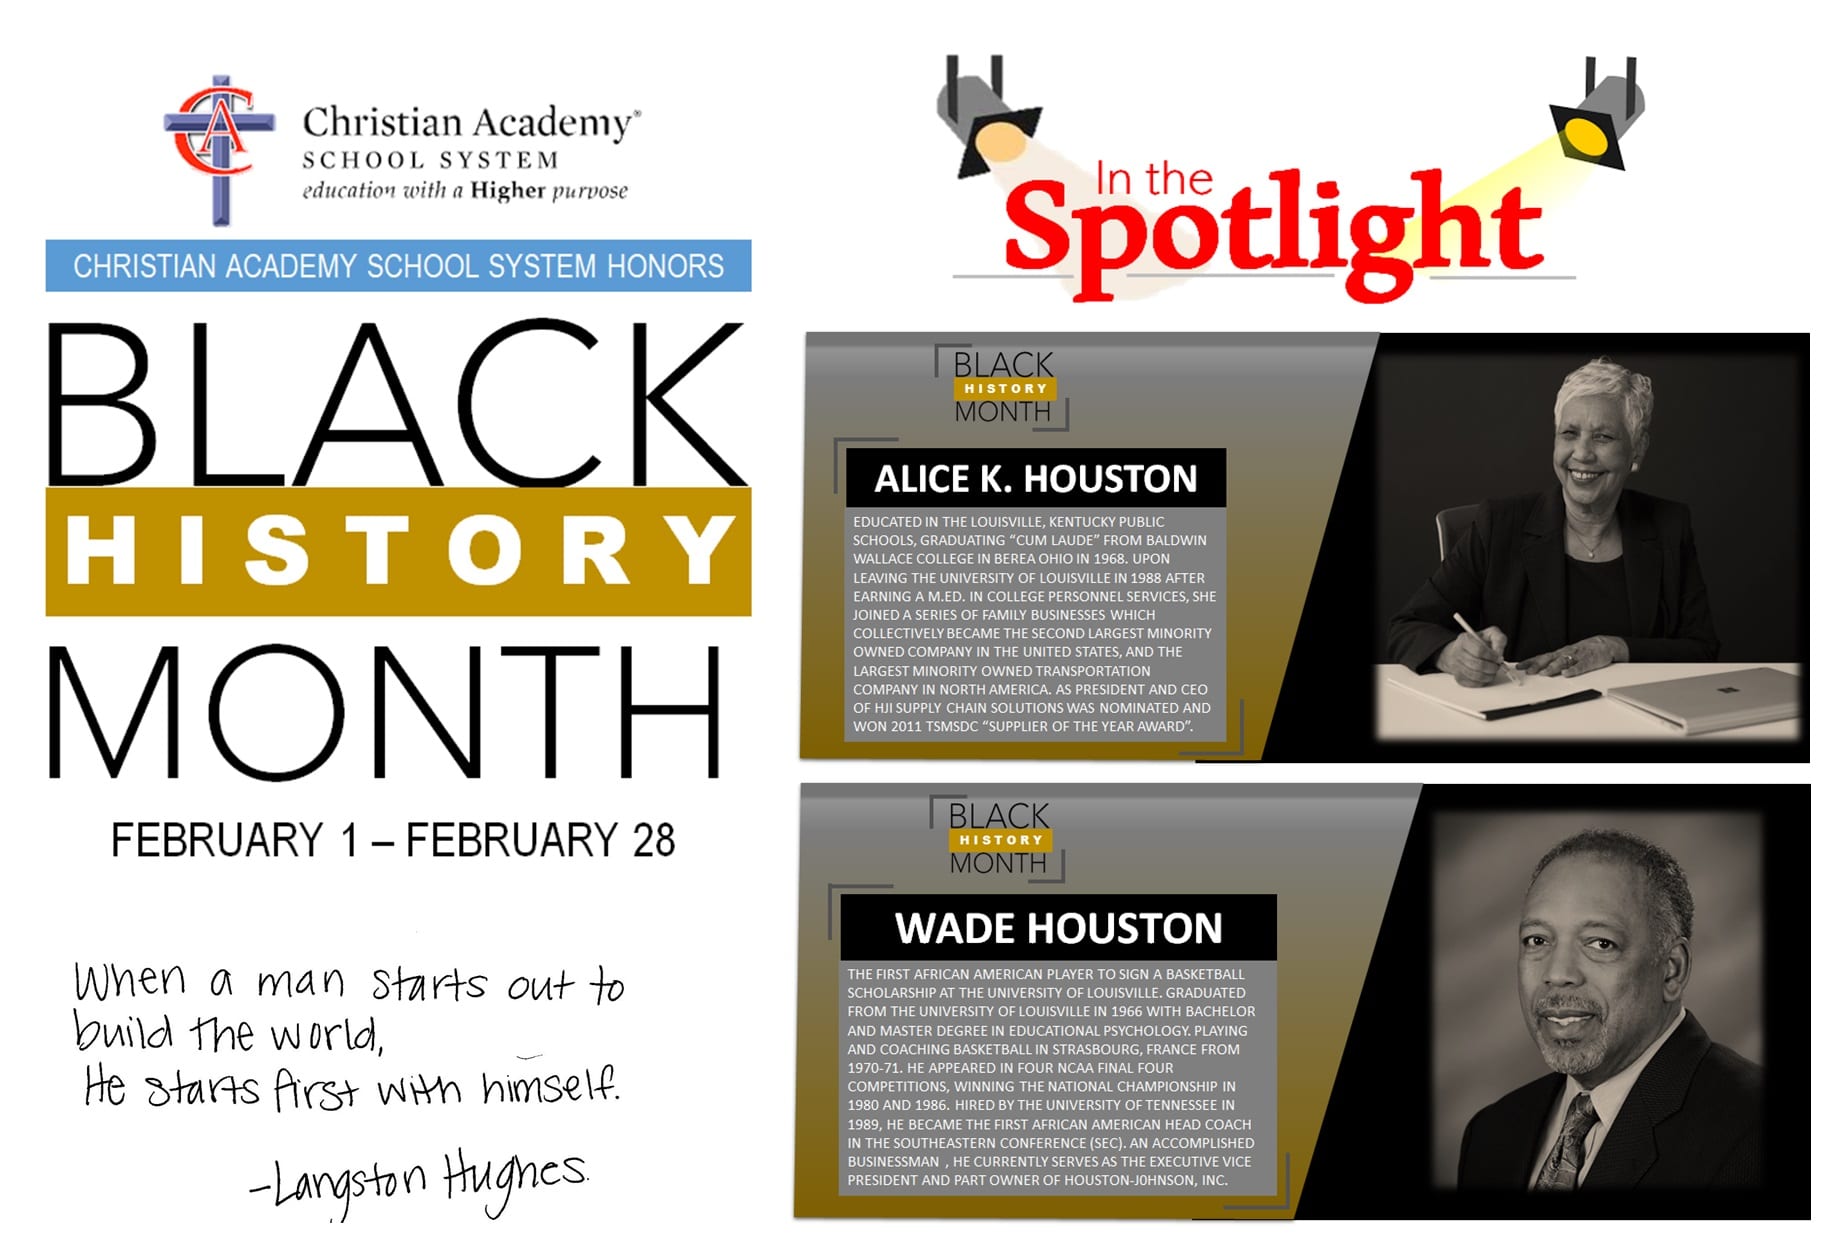 Christian Academy School System | Black History Month Spotlight #2